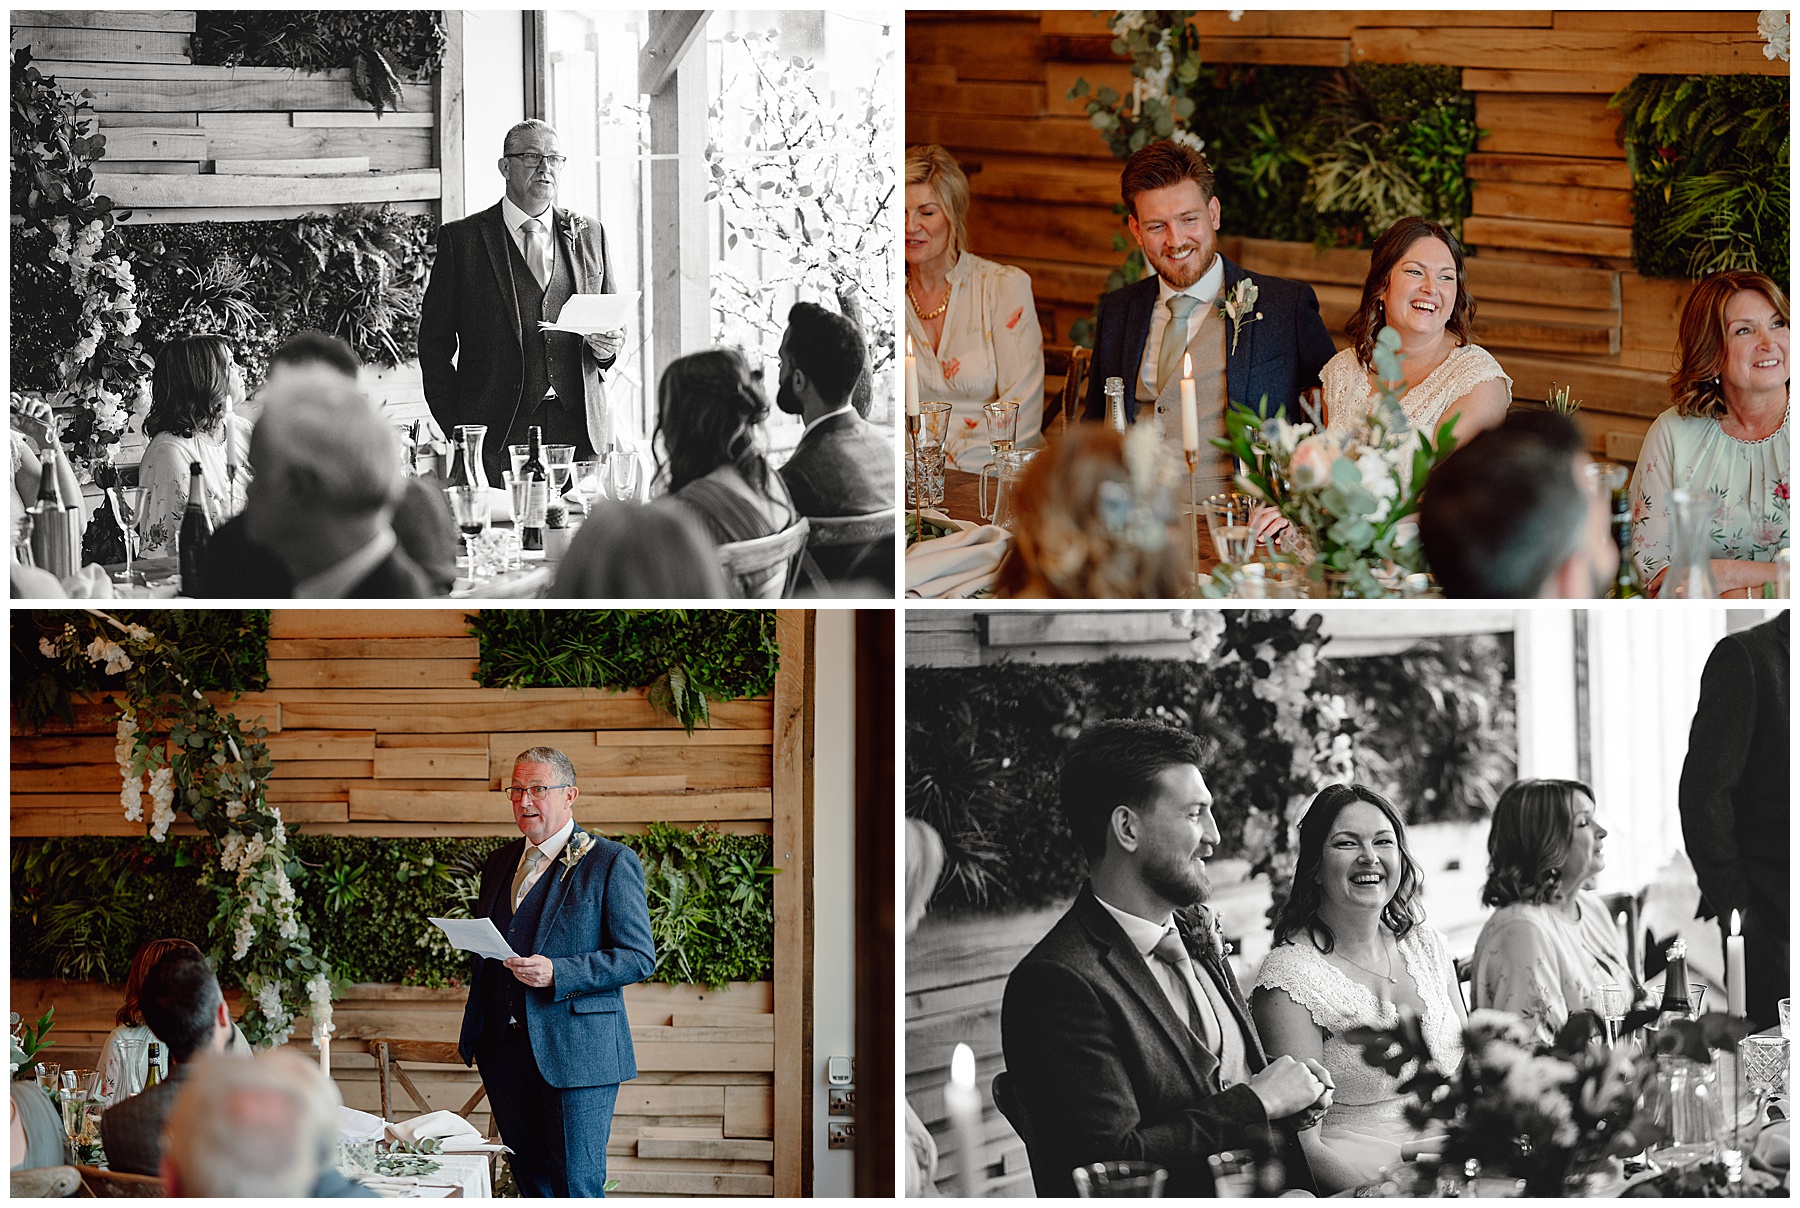 Wedding Speeches at Courtyard Wales Wedding